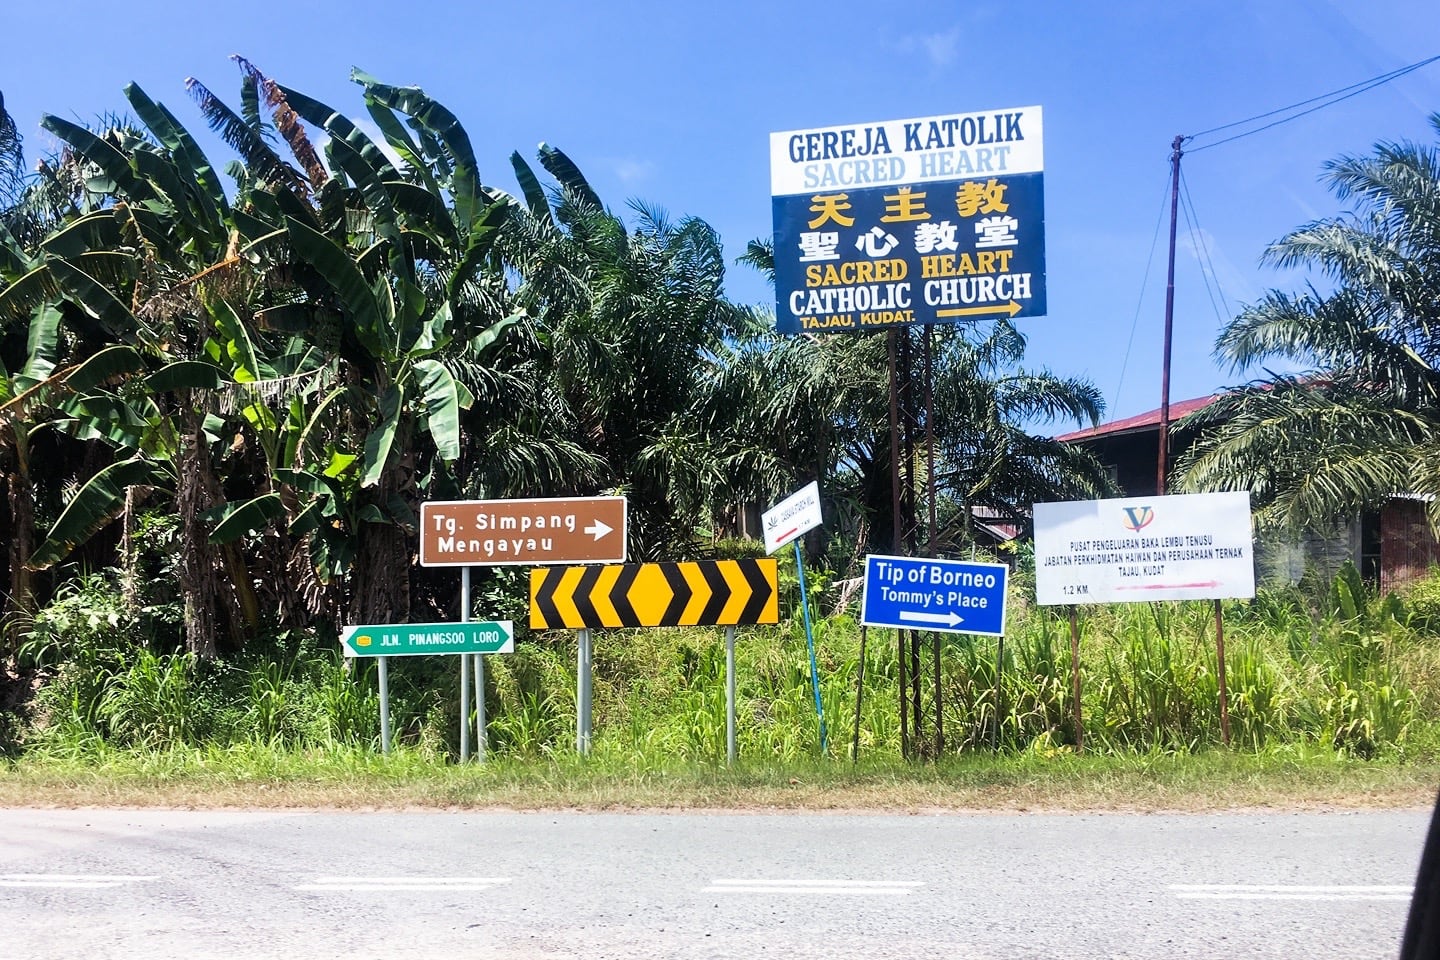 Tip of Borneo, Kudat, Sabah, Malaysia (Borneo)